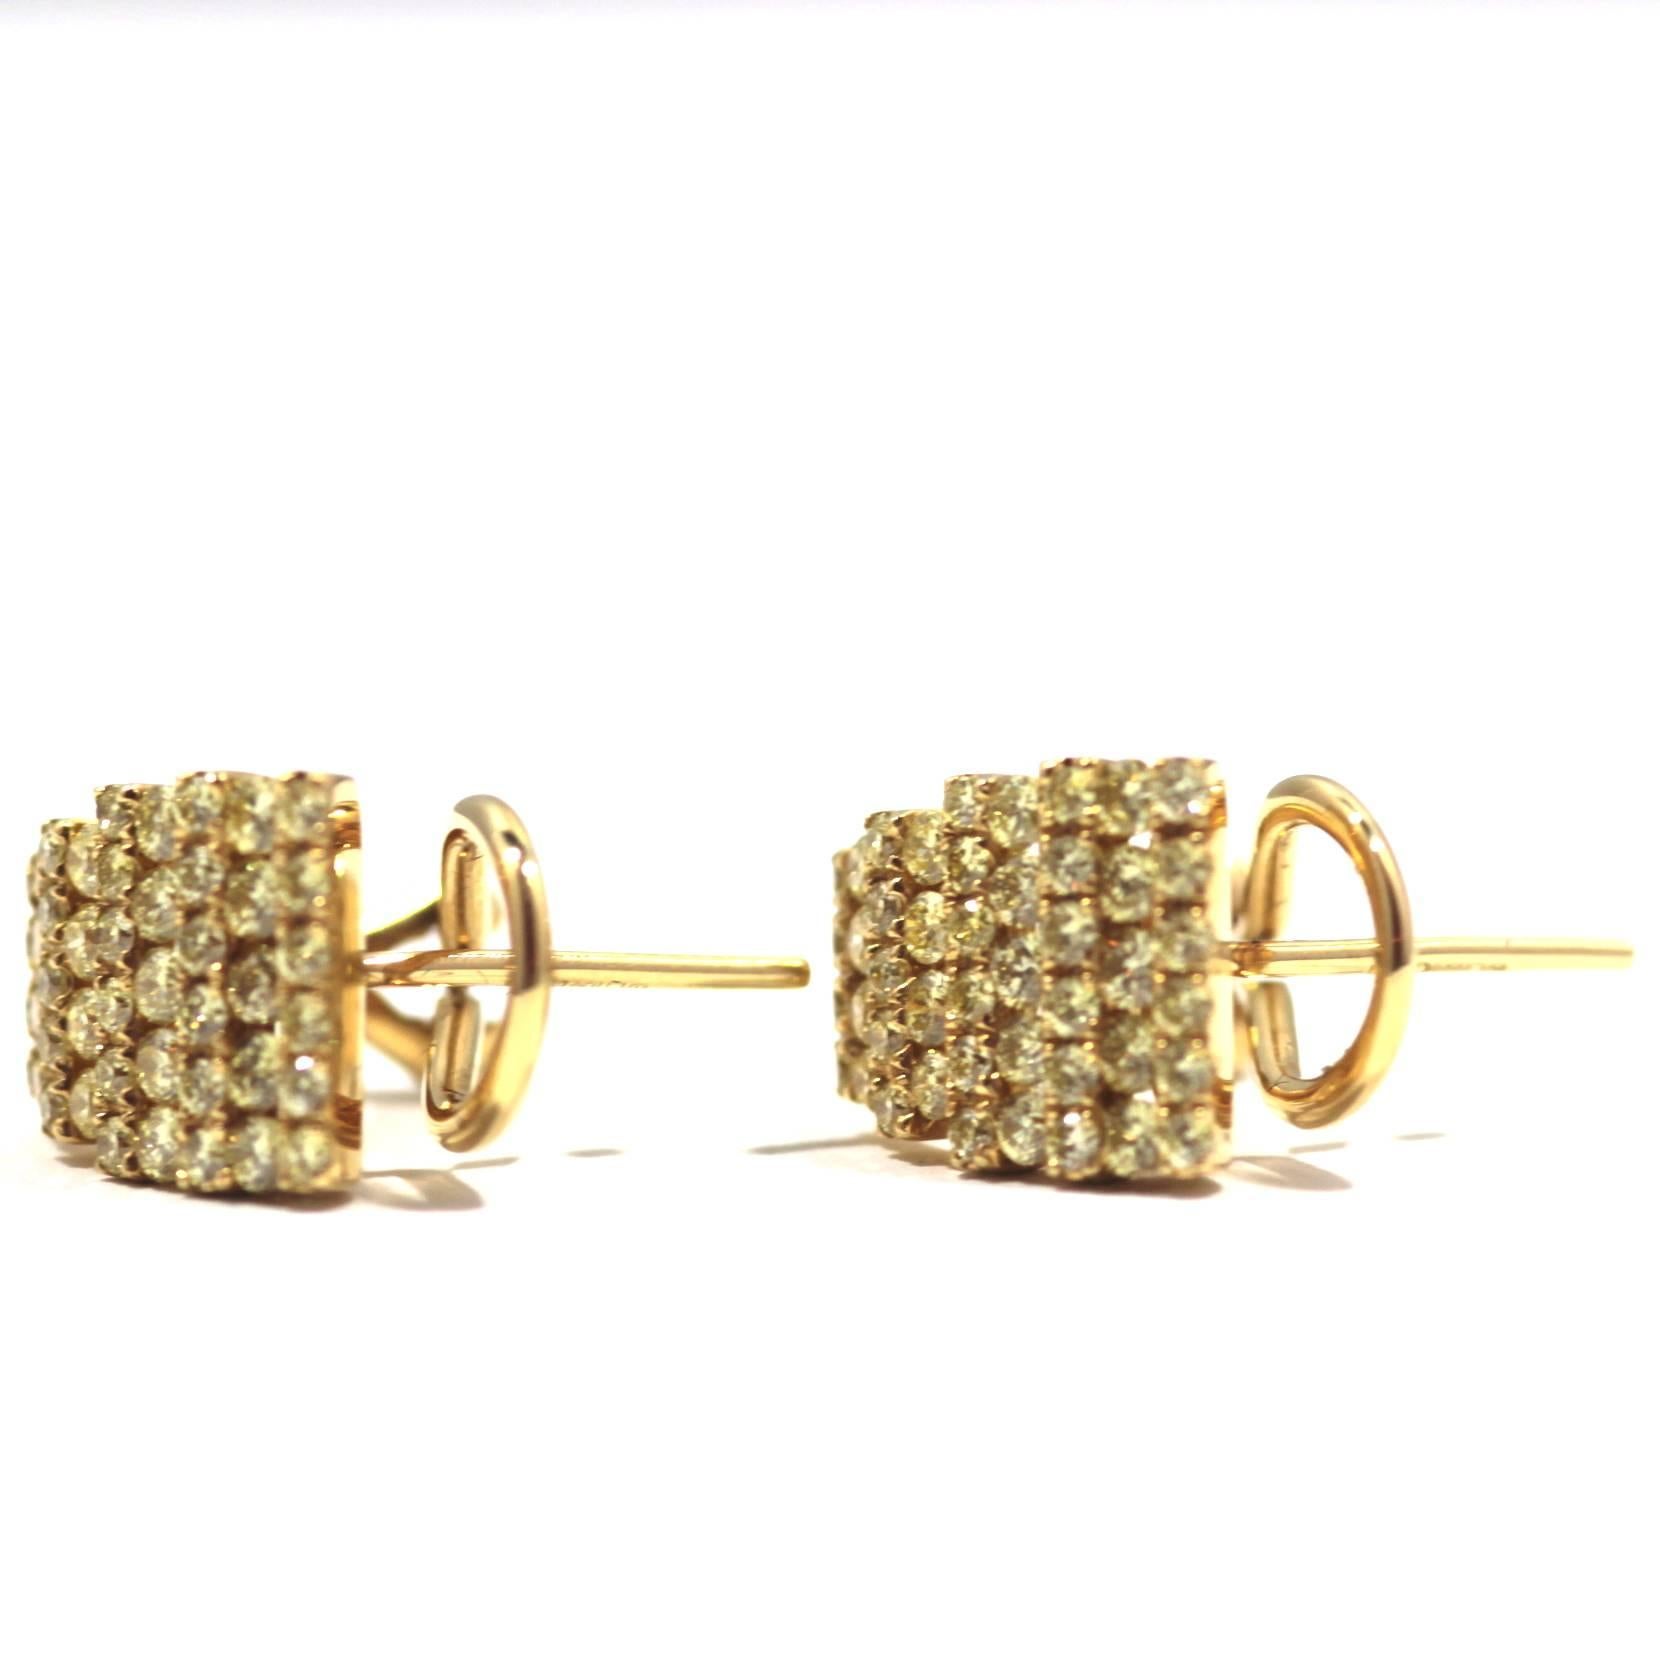 Fancy yellow diamond earrings set in 18ct yellow gold. 1.18carats diamond. 